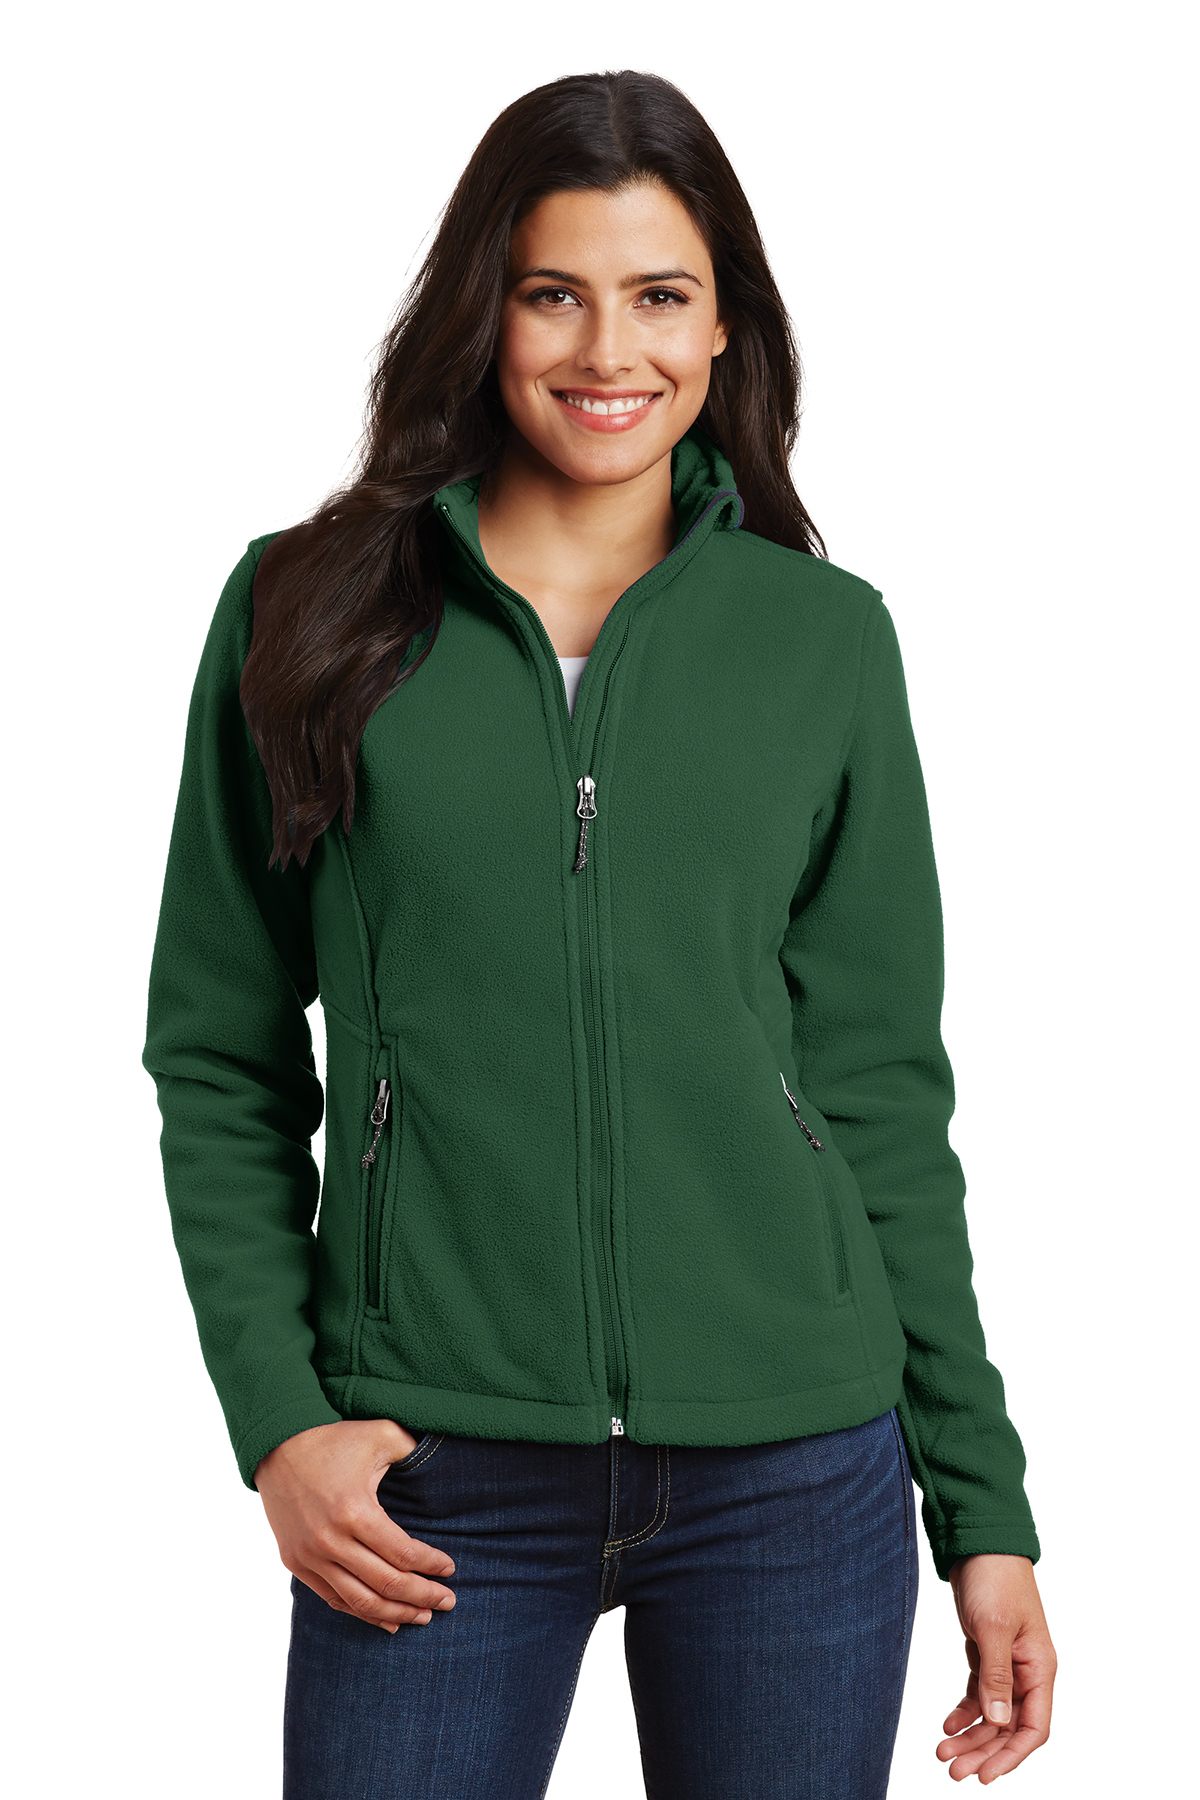 L217 Port Authority® Ladies Value Fleece Jacket